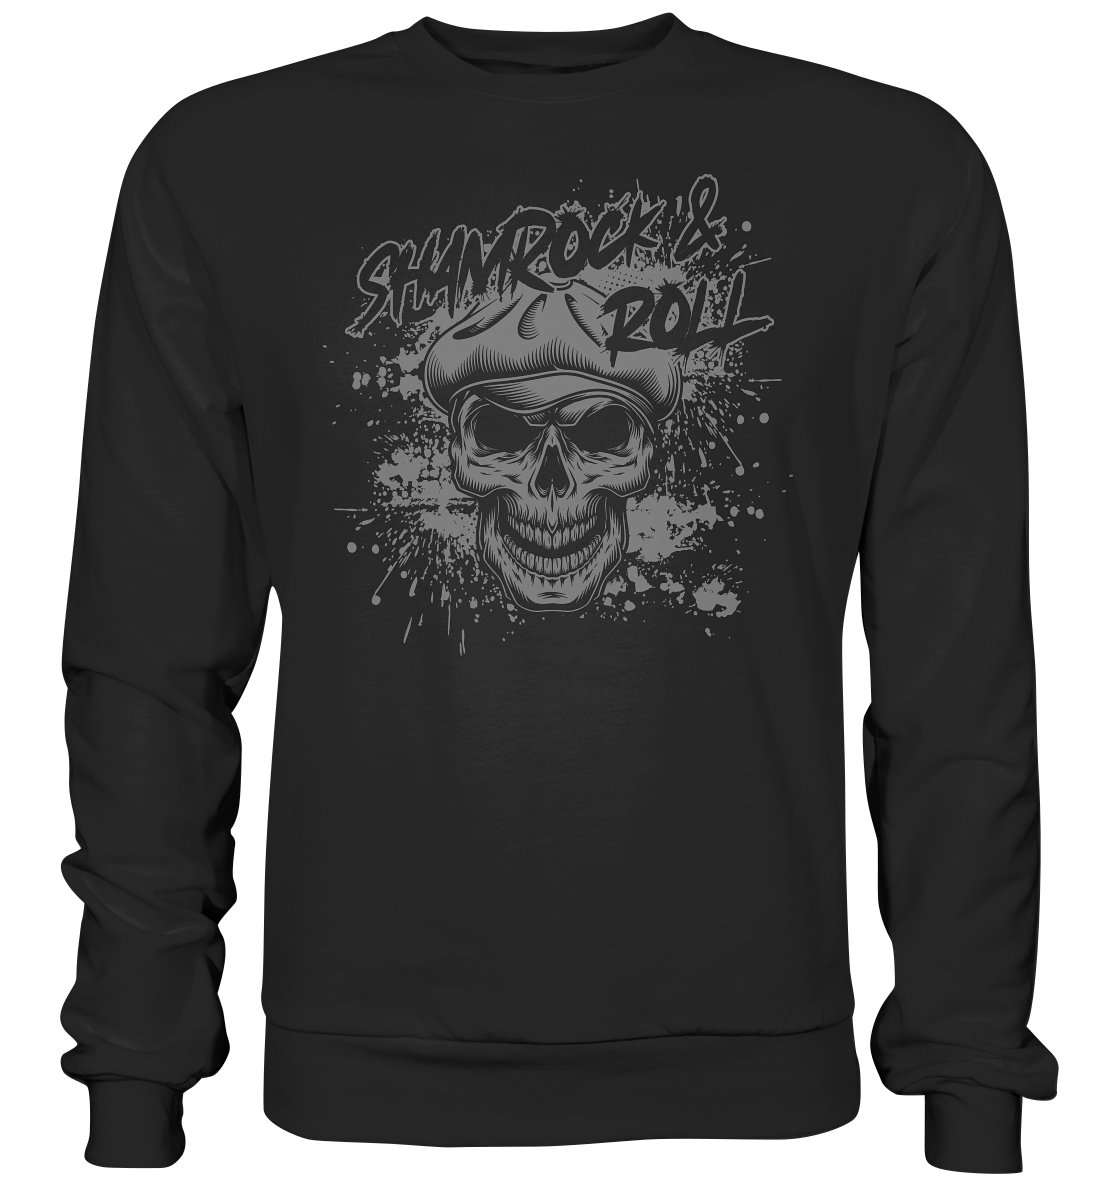 Shamrock And Roll "Skull" - Premium Sweatshirt